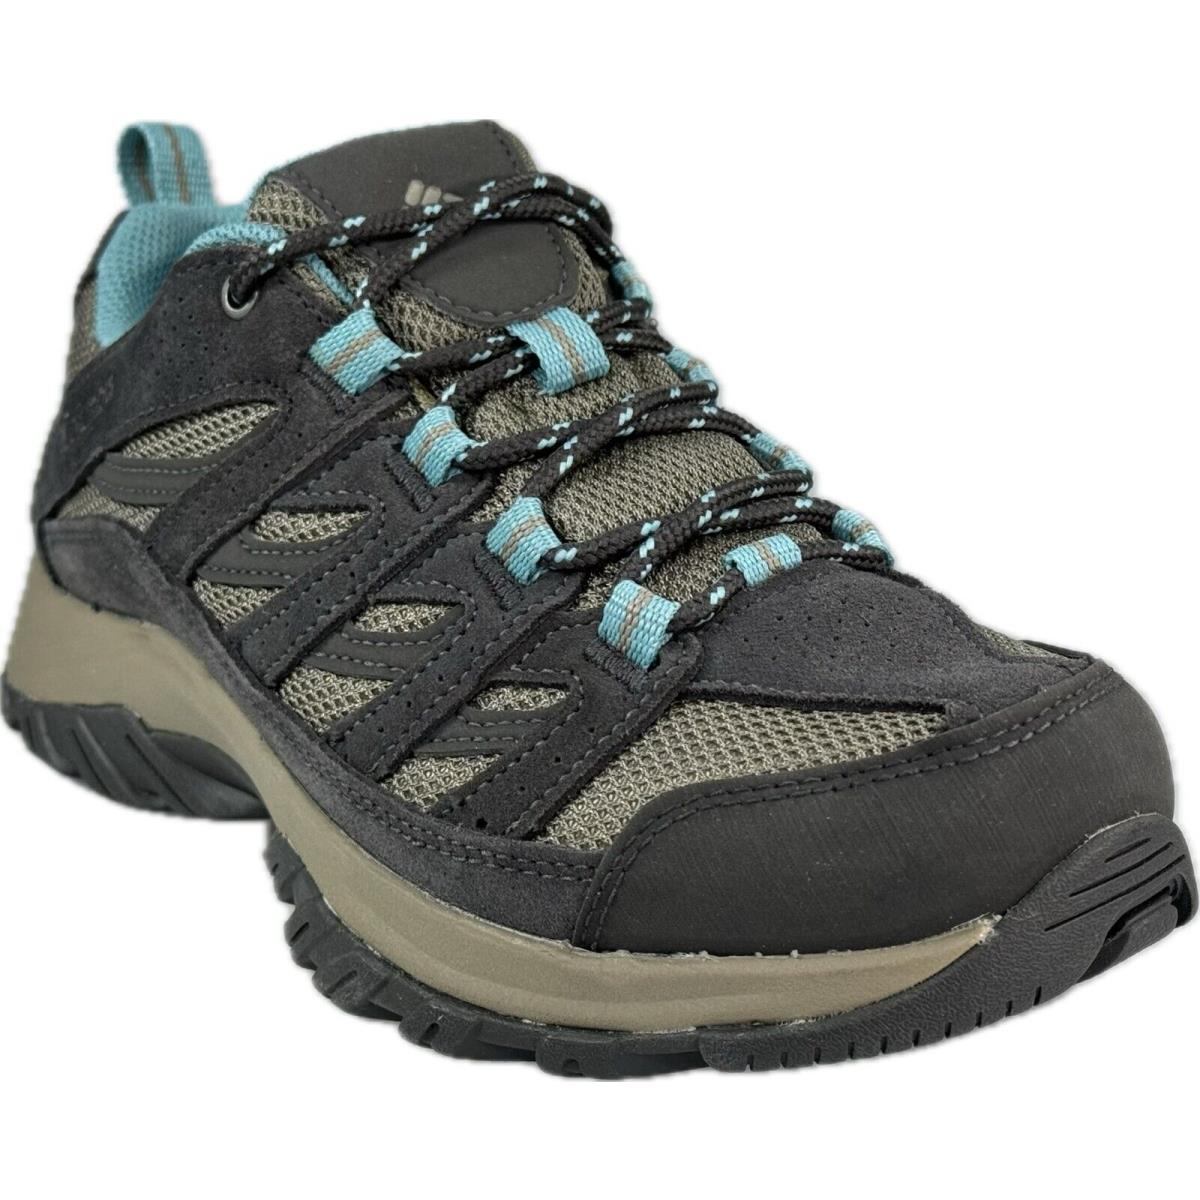 Columbia Women`s Crestwood Waterproof Trail Hiking Shoes Sz 7.5 BL5372-006 - Kettle-Dark grey